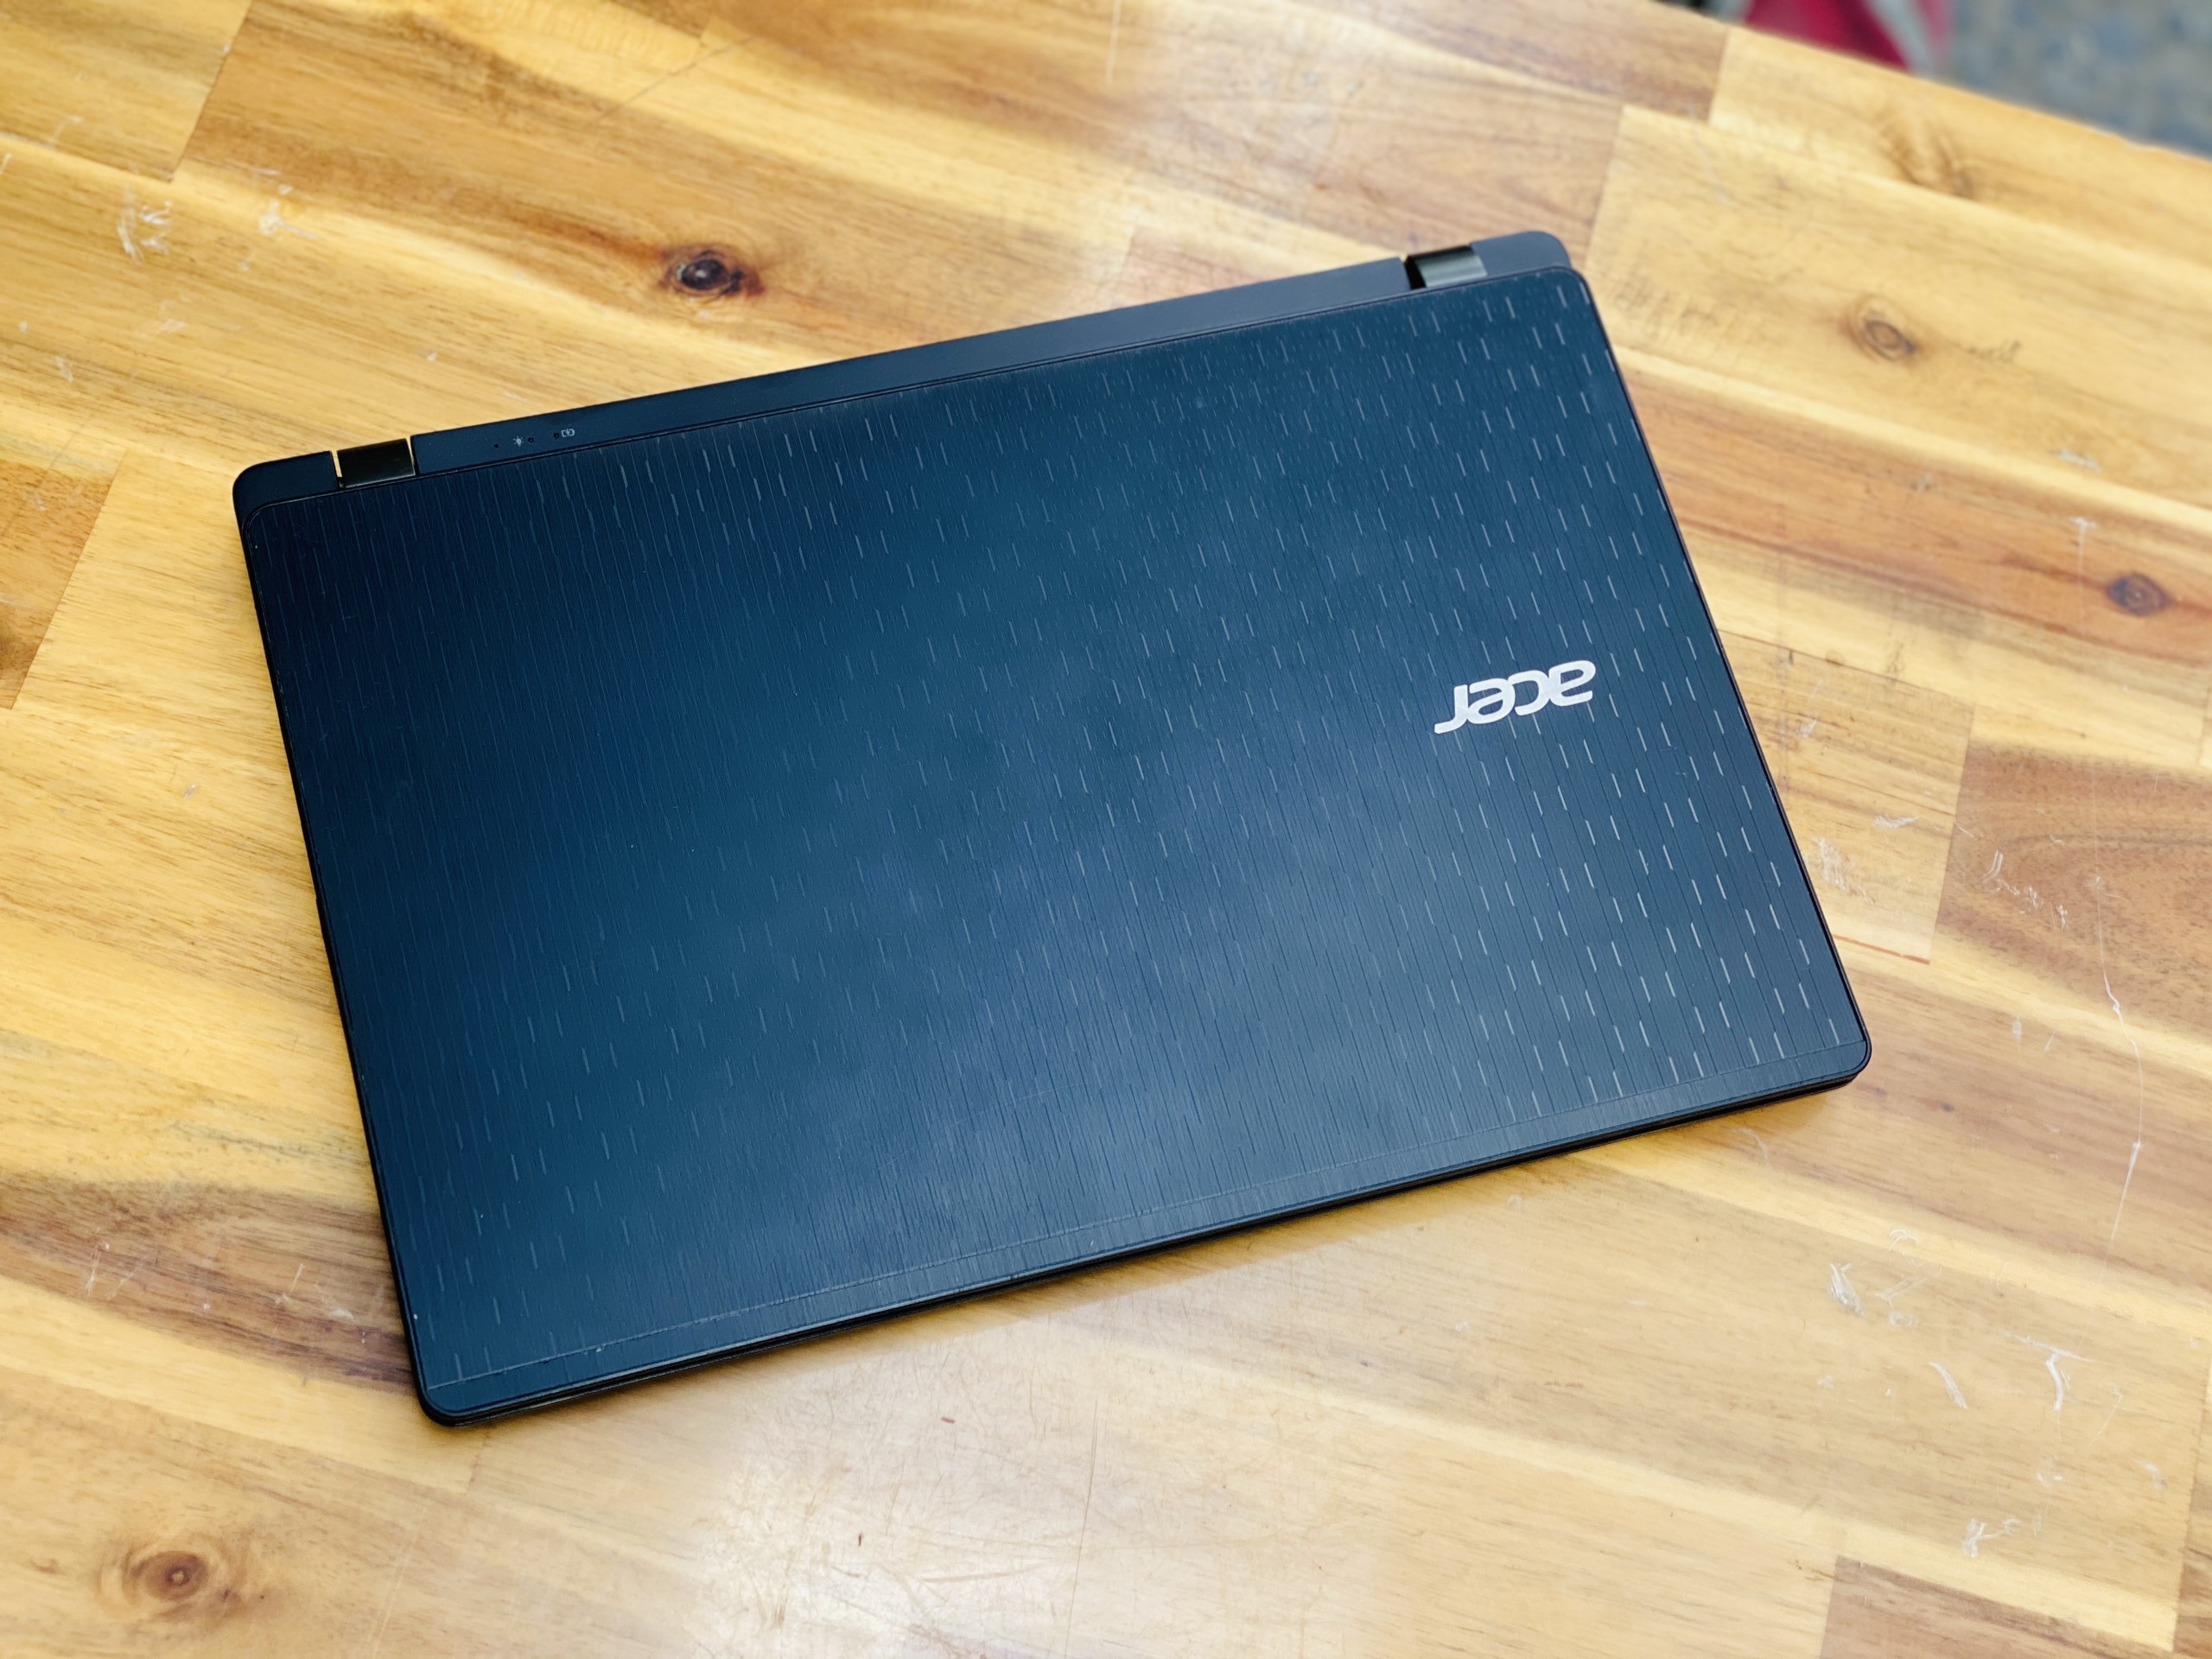 Laptop Acer Aspire V3-372/ i5 6200U/ 8G/ SSD/ Win 10/ 13in/ Giá rẻ2